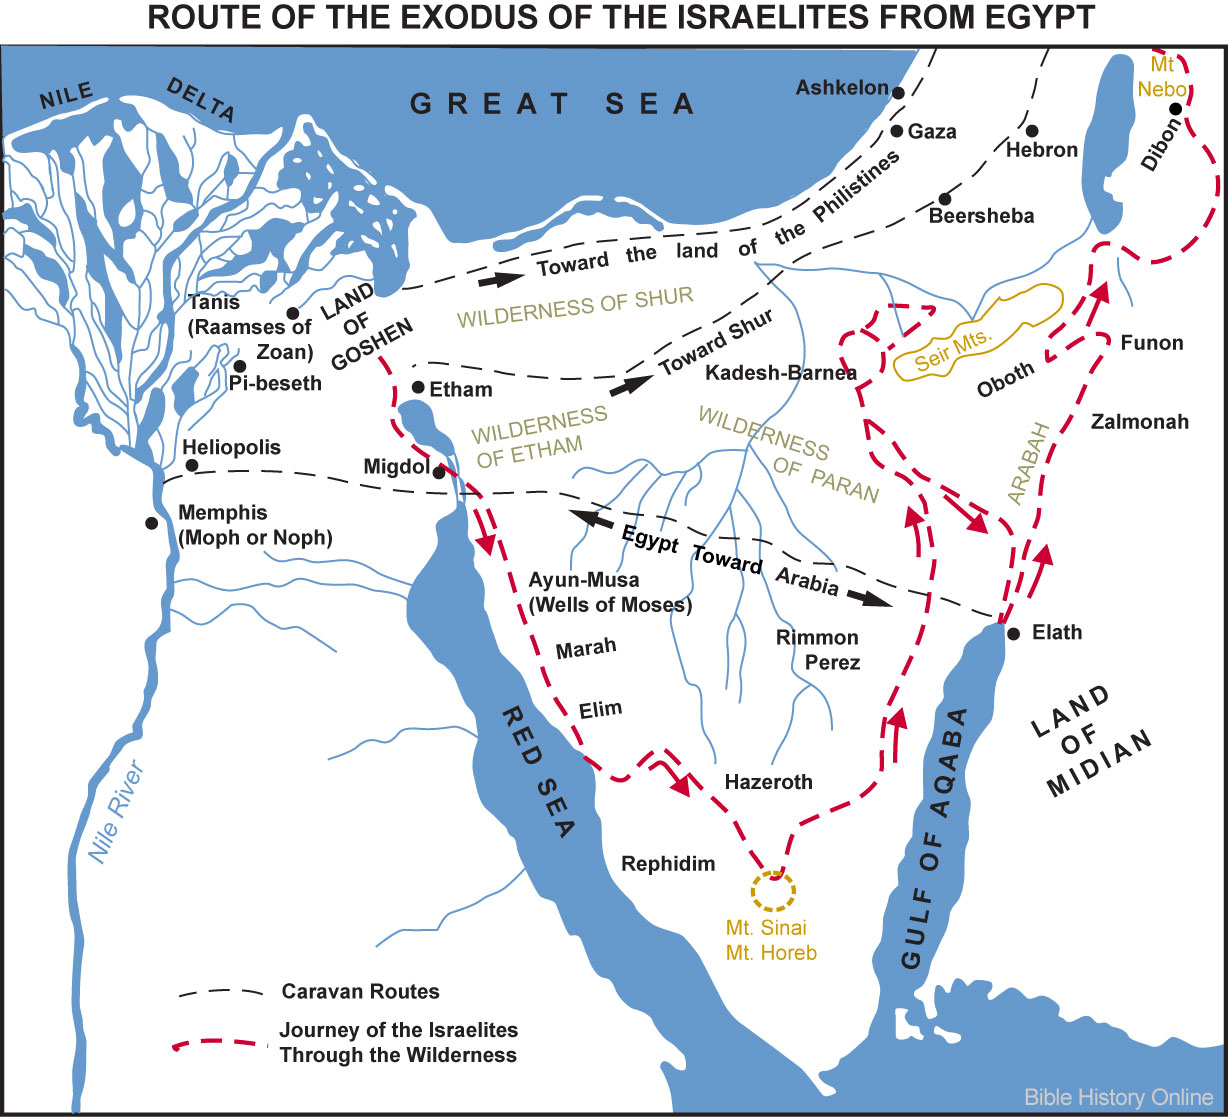 Map-Route-Exodus-Israelites-Egypt[1]